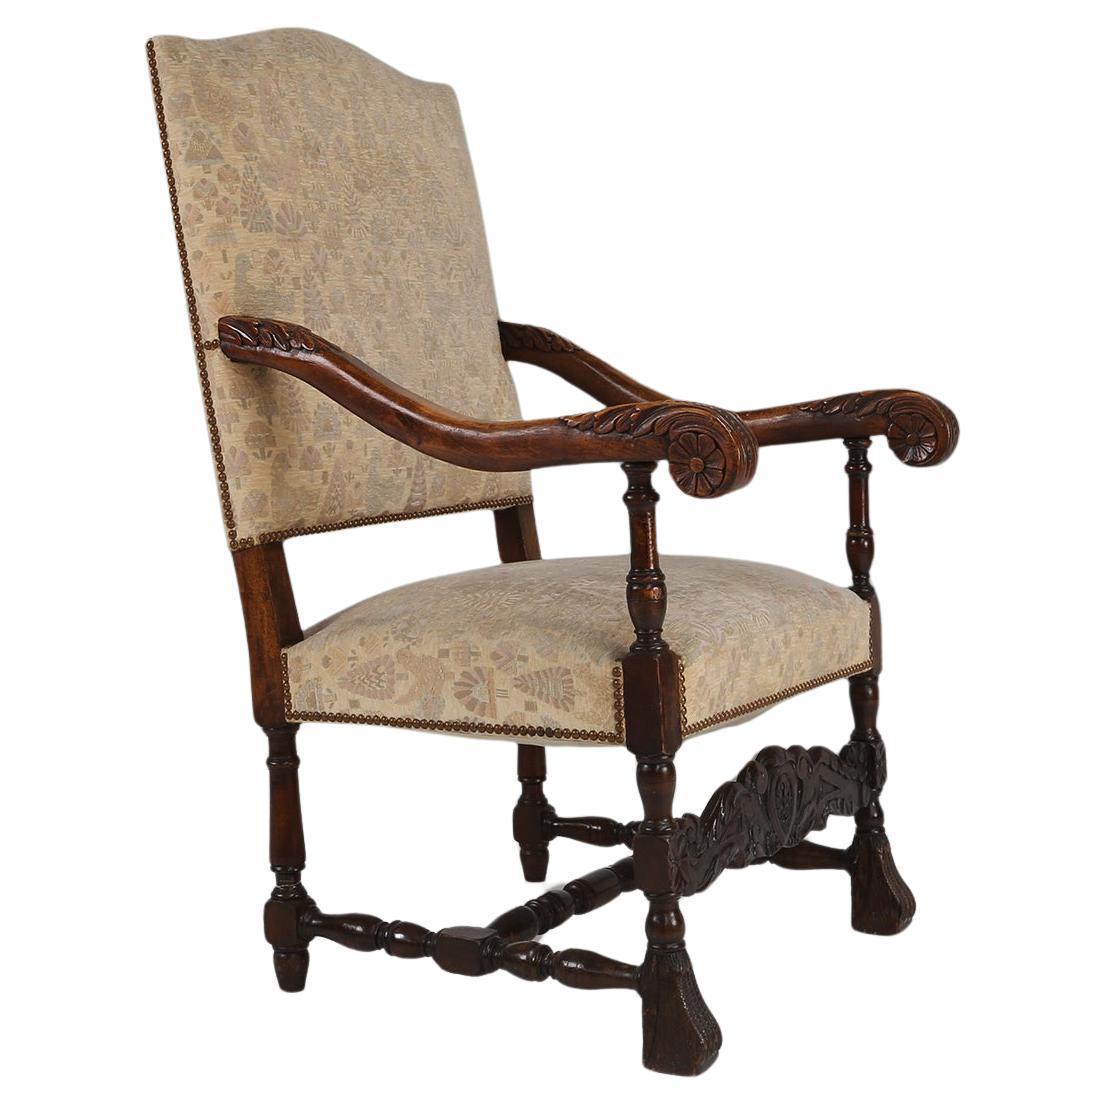 19th century Throne Armchair in Renaissance Style